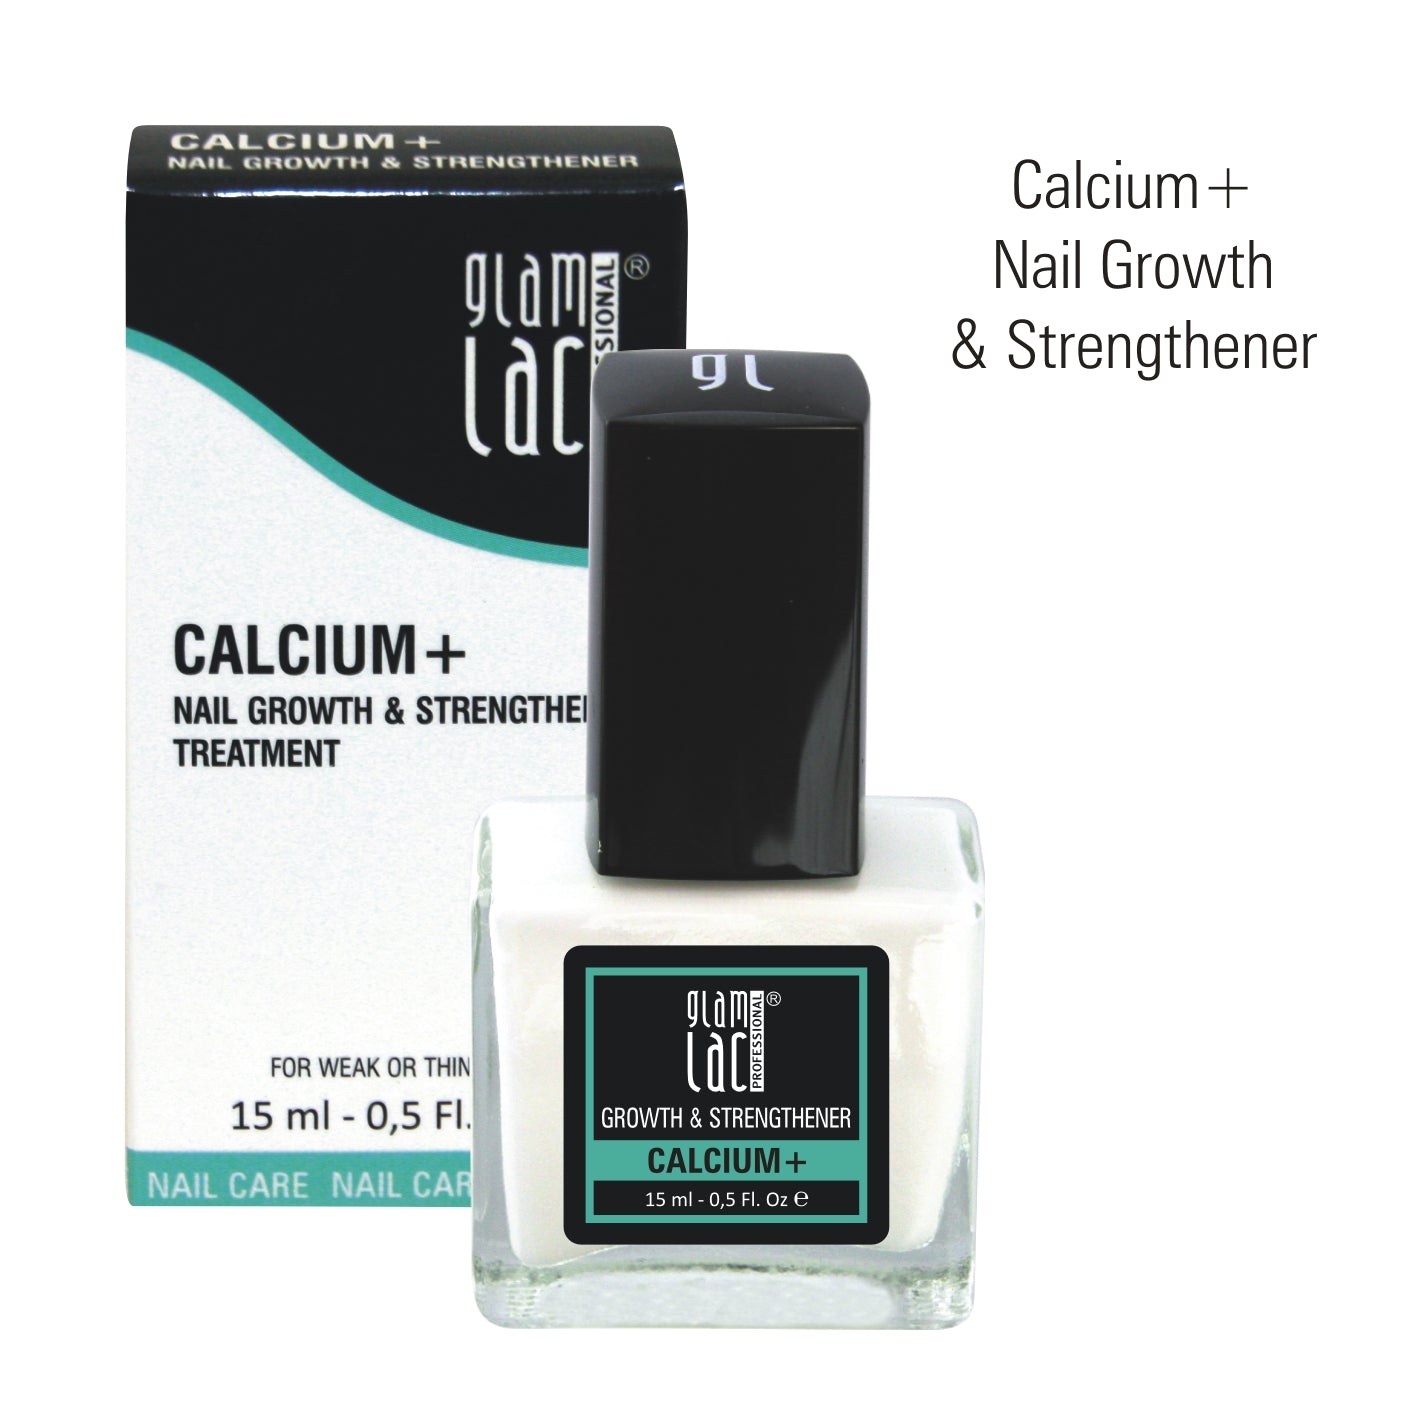 Calcium + Nail Growth & Strengthener- Natural Nail Care